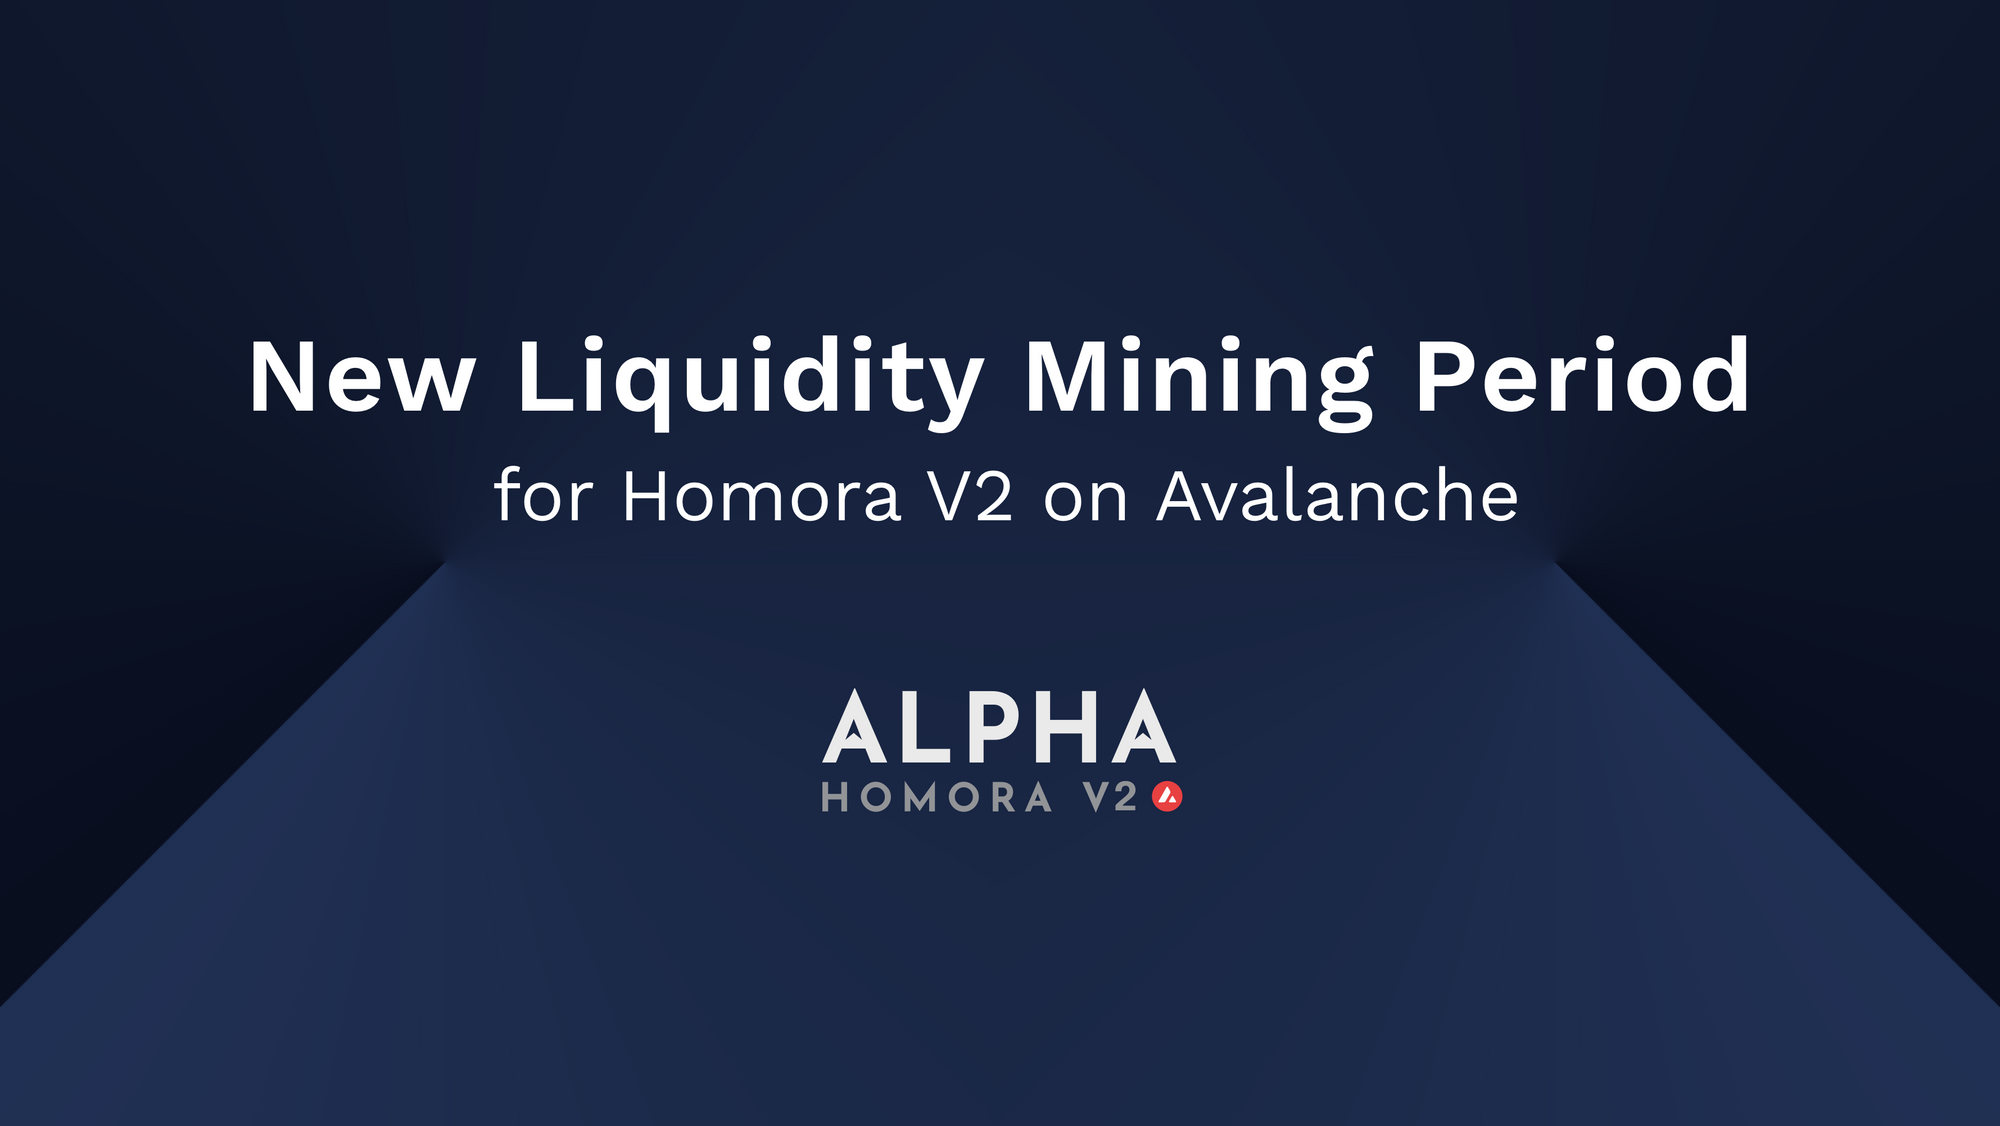 New Liquidity Mining Period & Rewards for Homora V2 on Avalanche